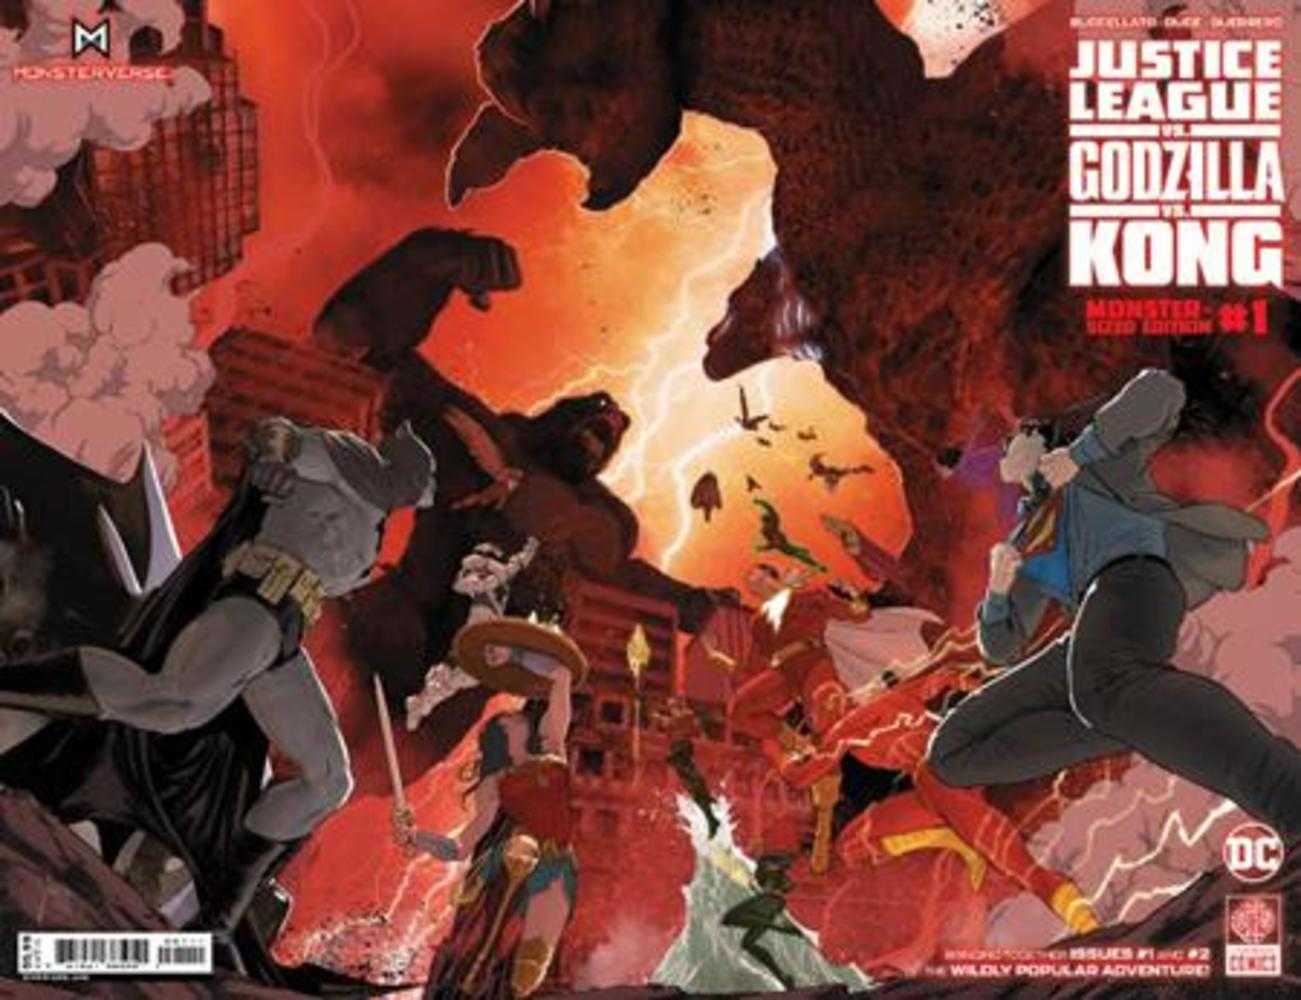 Justice League vs Godzilla vs Kong Monster-Sized Edition | L.A. Mood Comics and Games